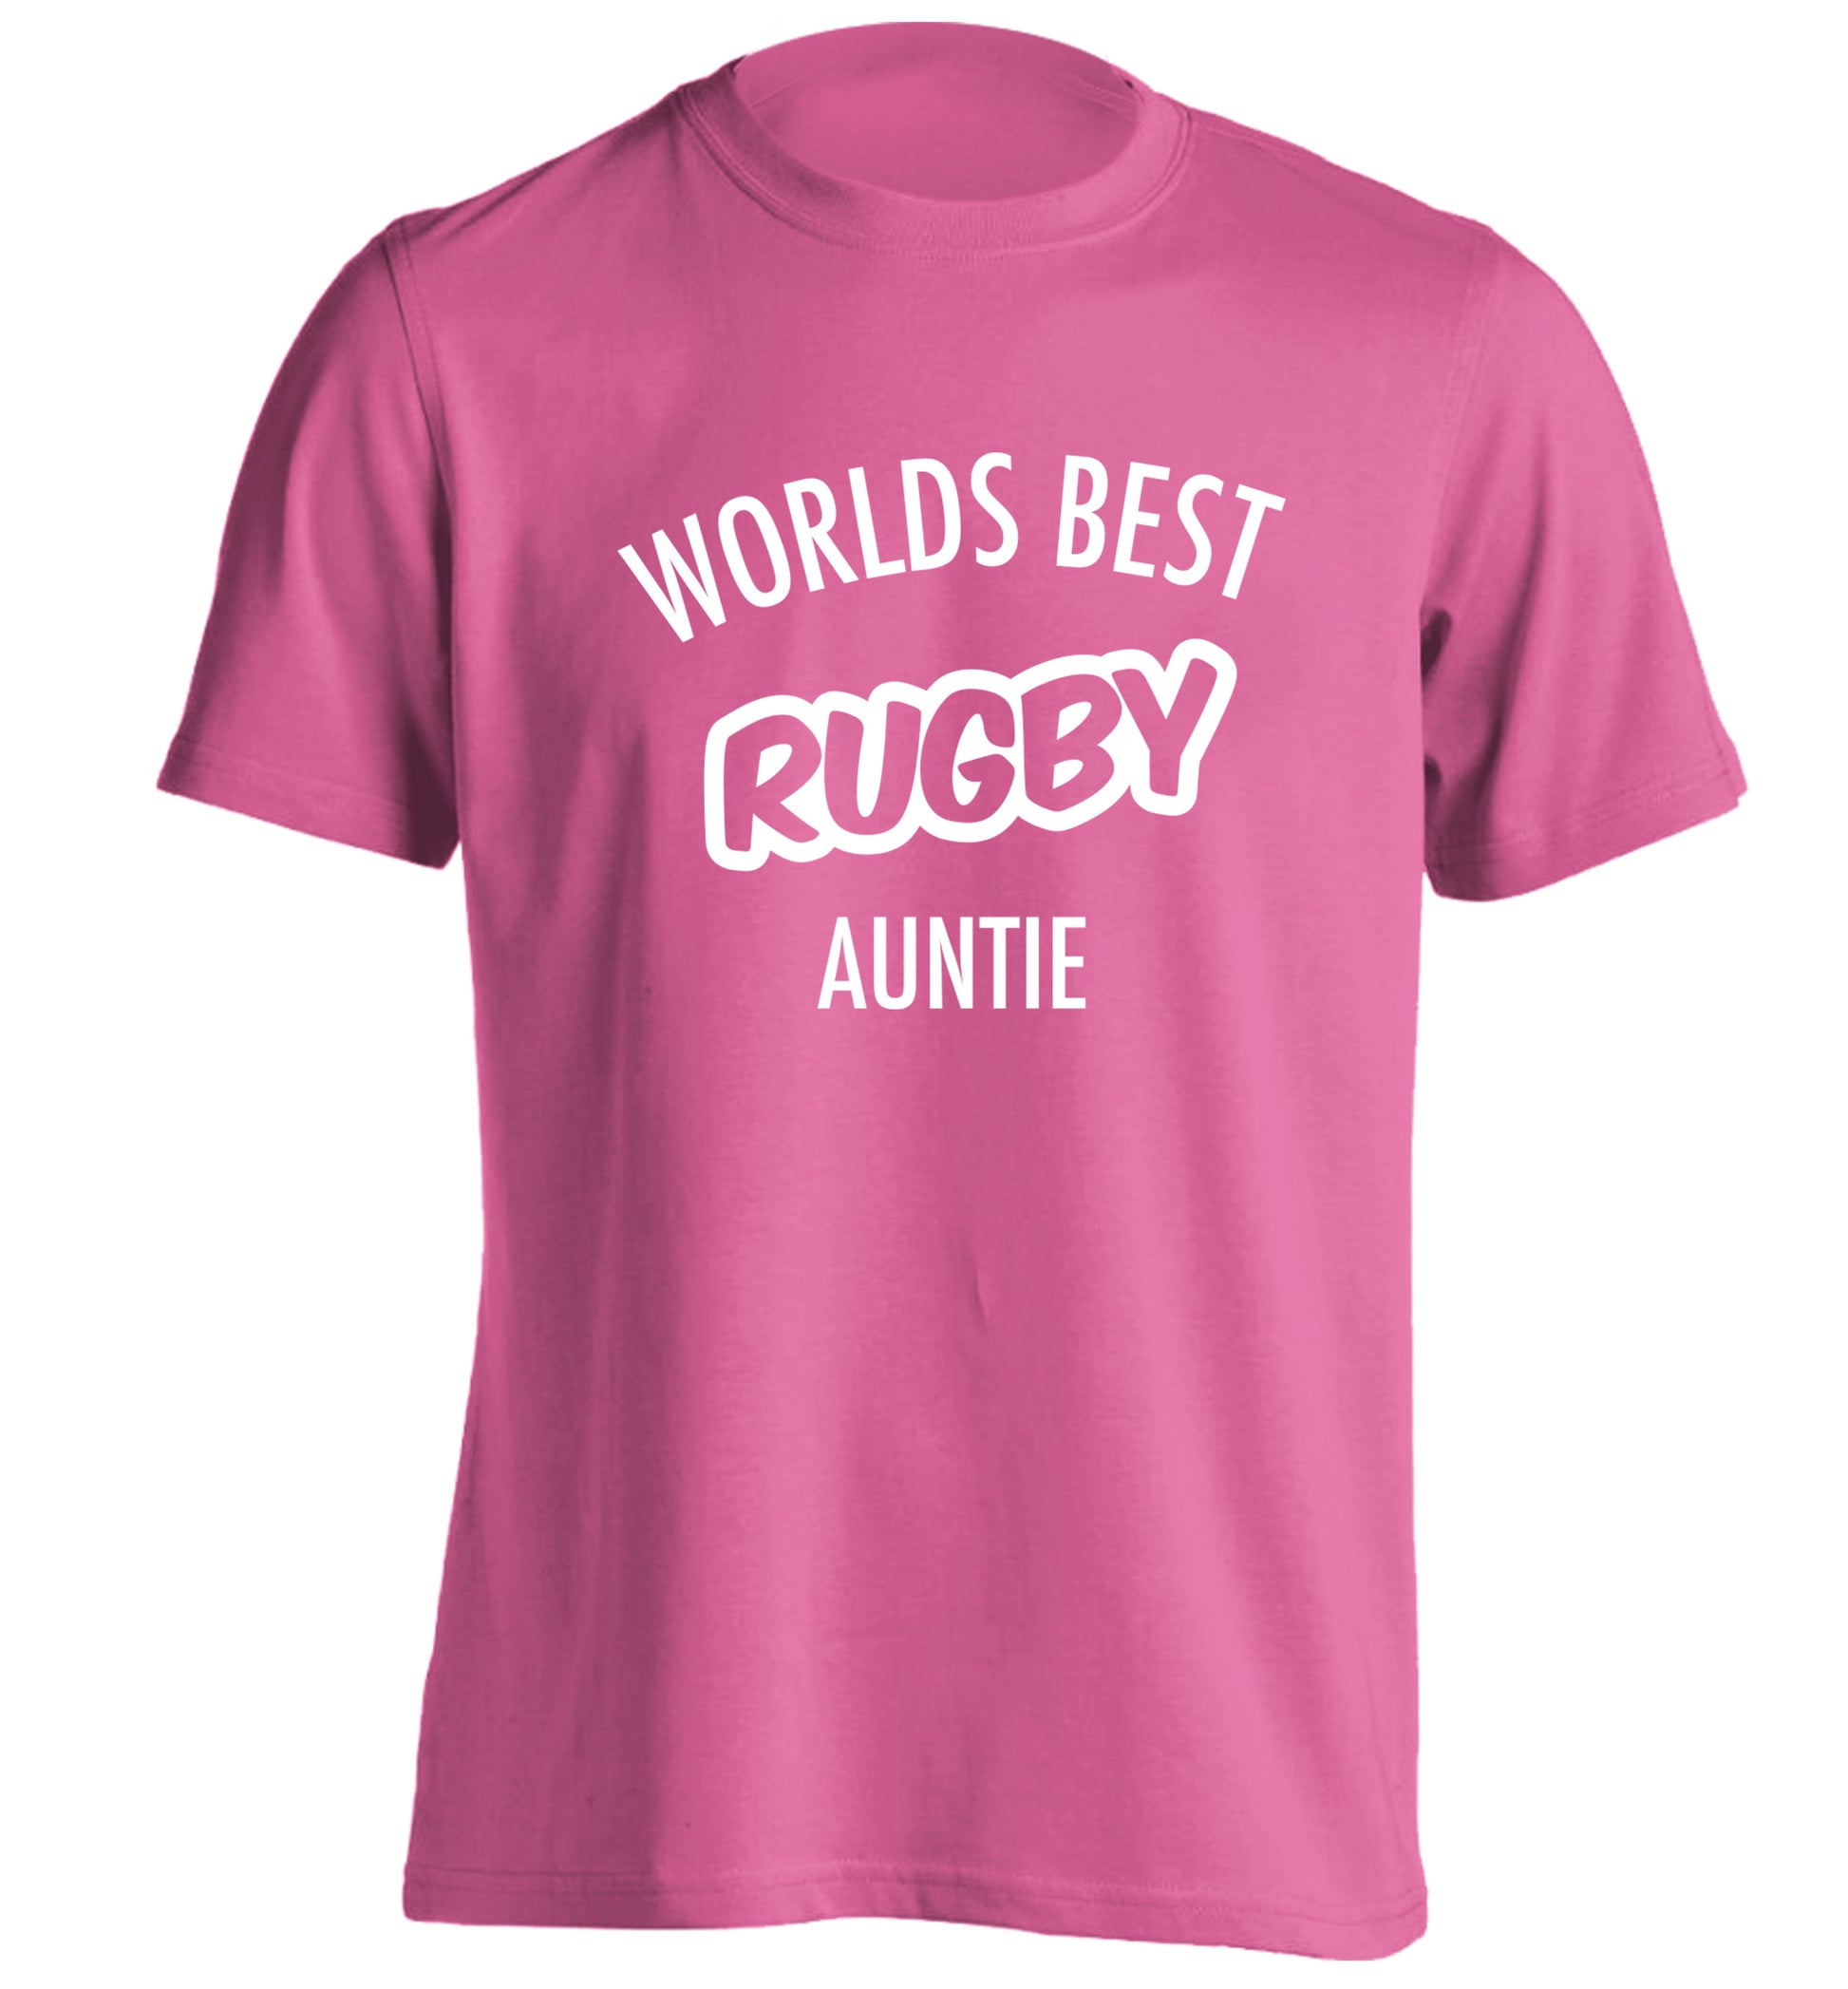 Worlds best rugby auntie adults unisex pink Tshirt 2XL